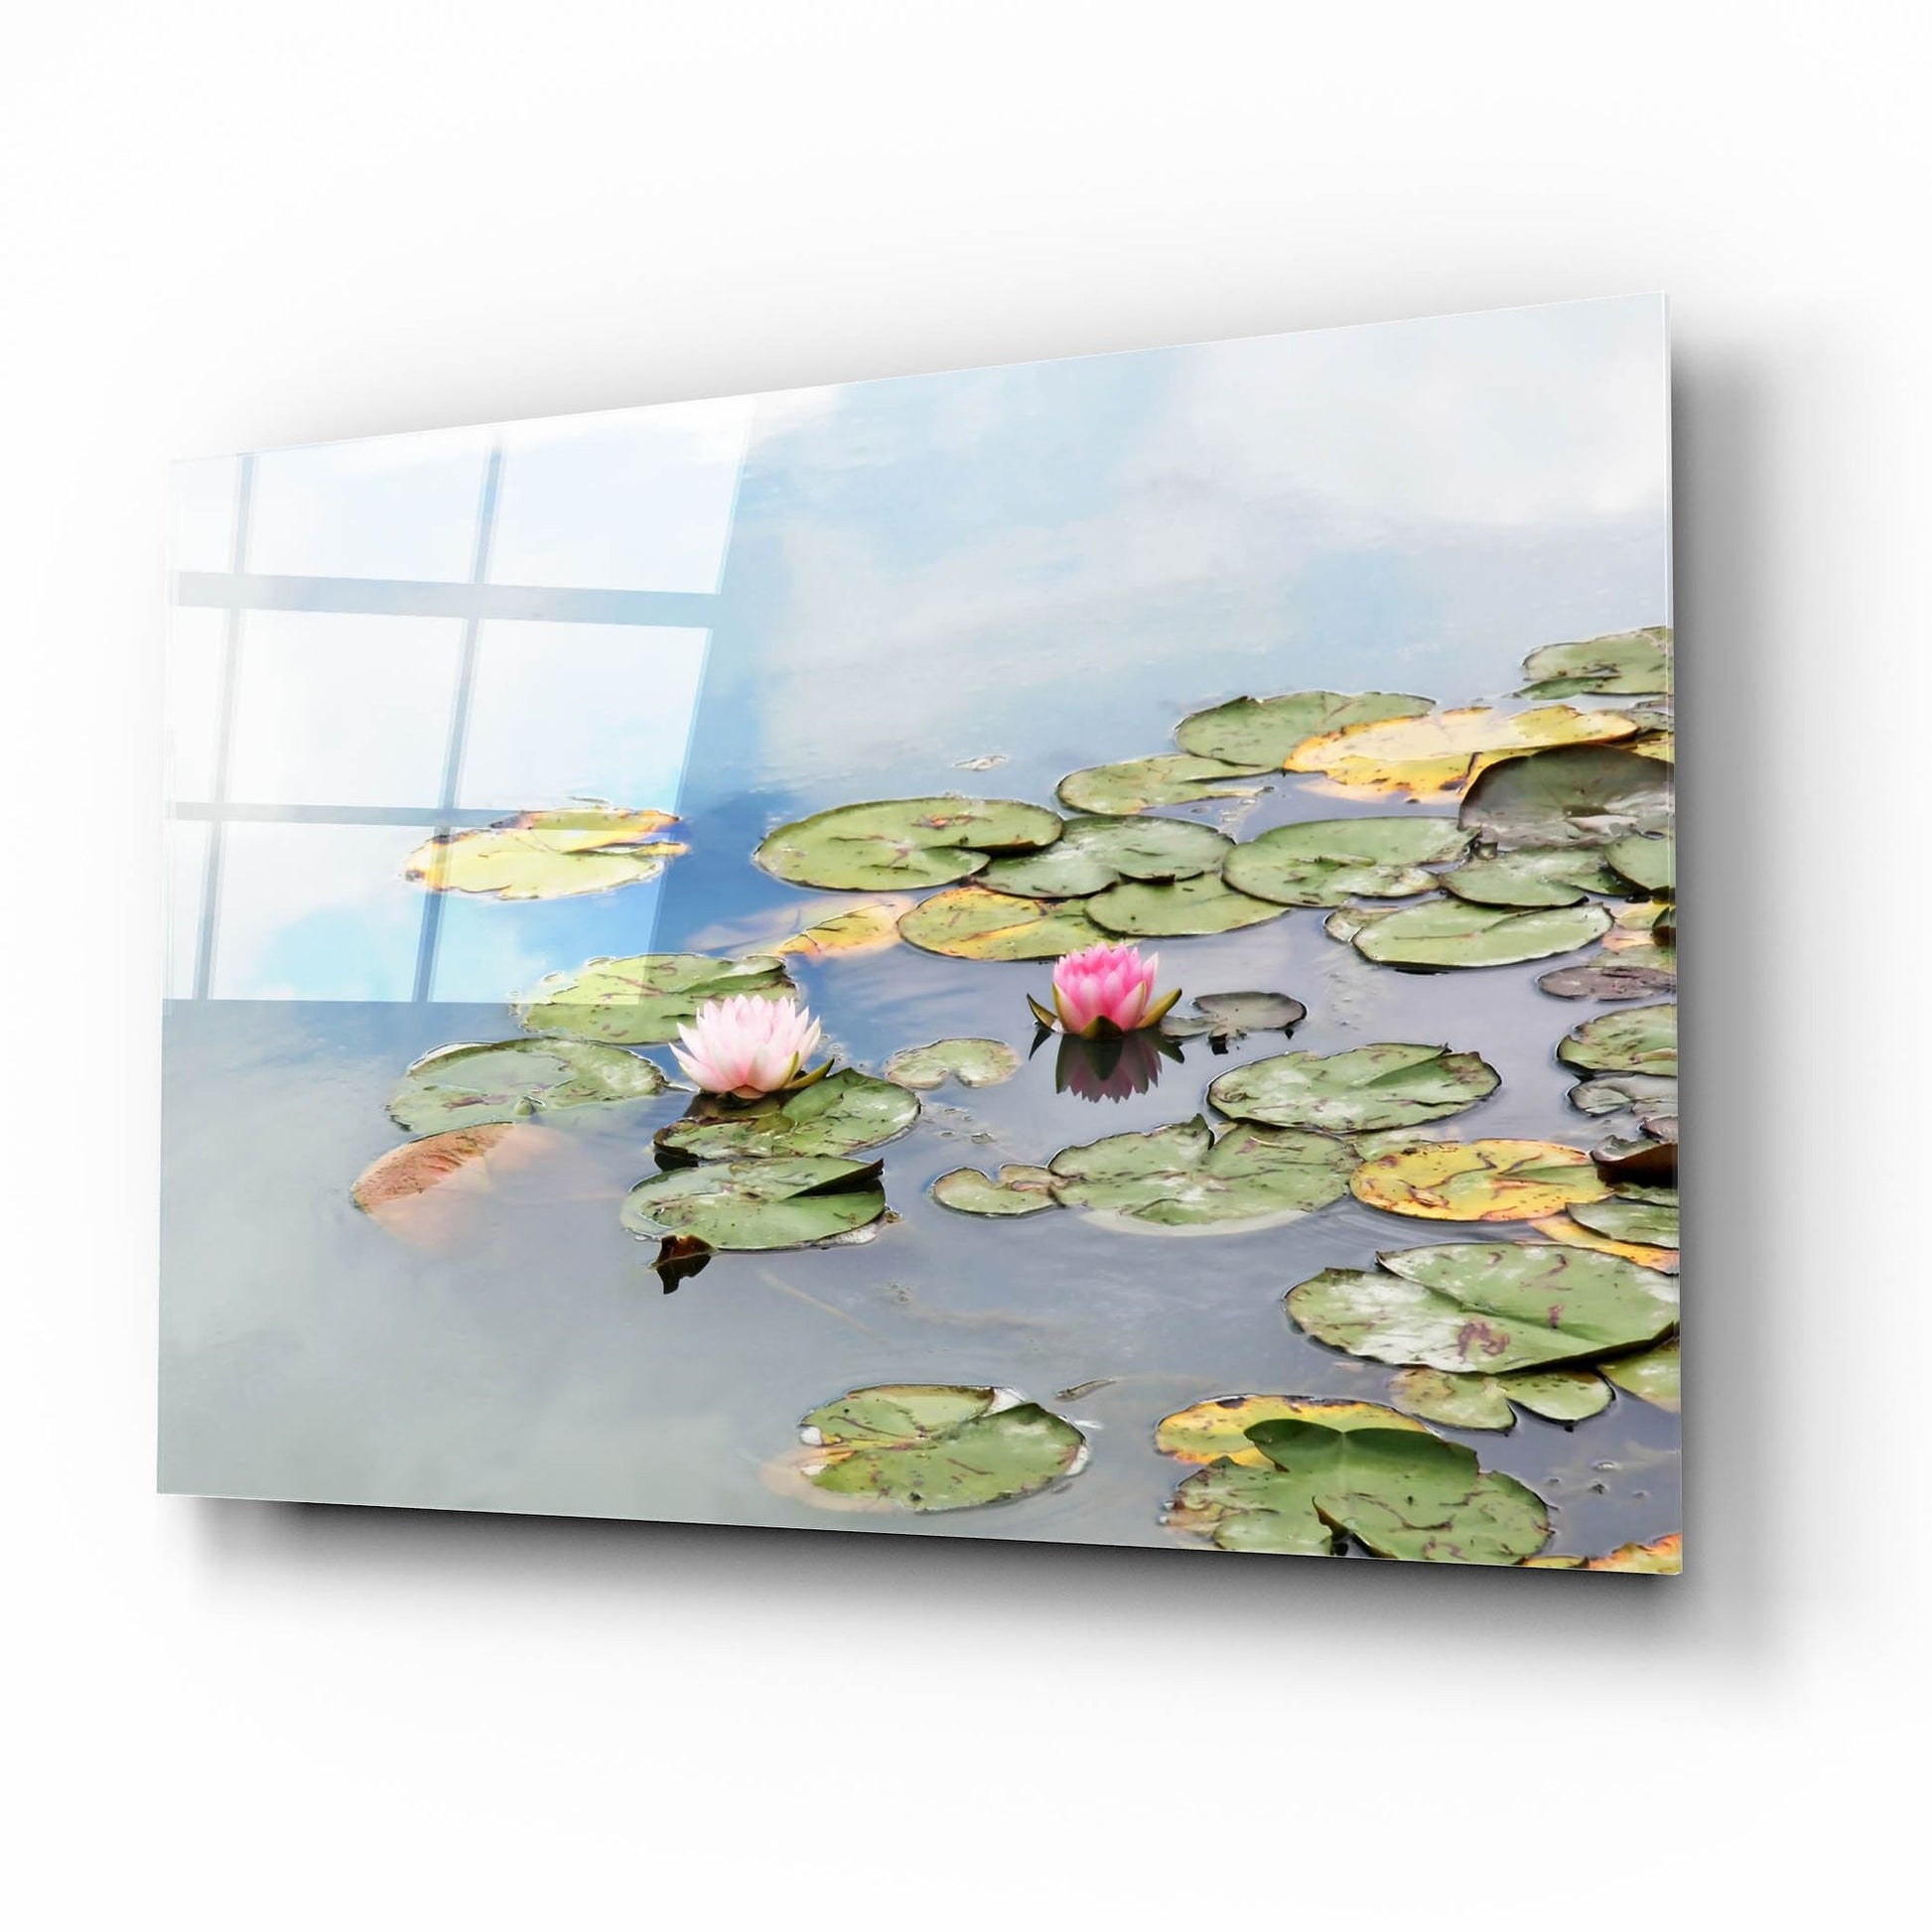 Epic Art ' Monet's Garden' by Brooke T. Ryan, Acrylic Glass Wall Art,16x12